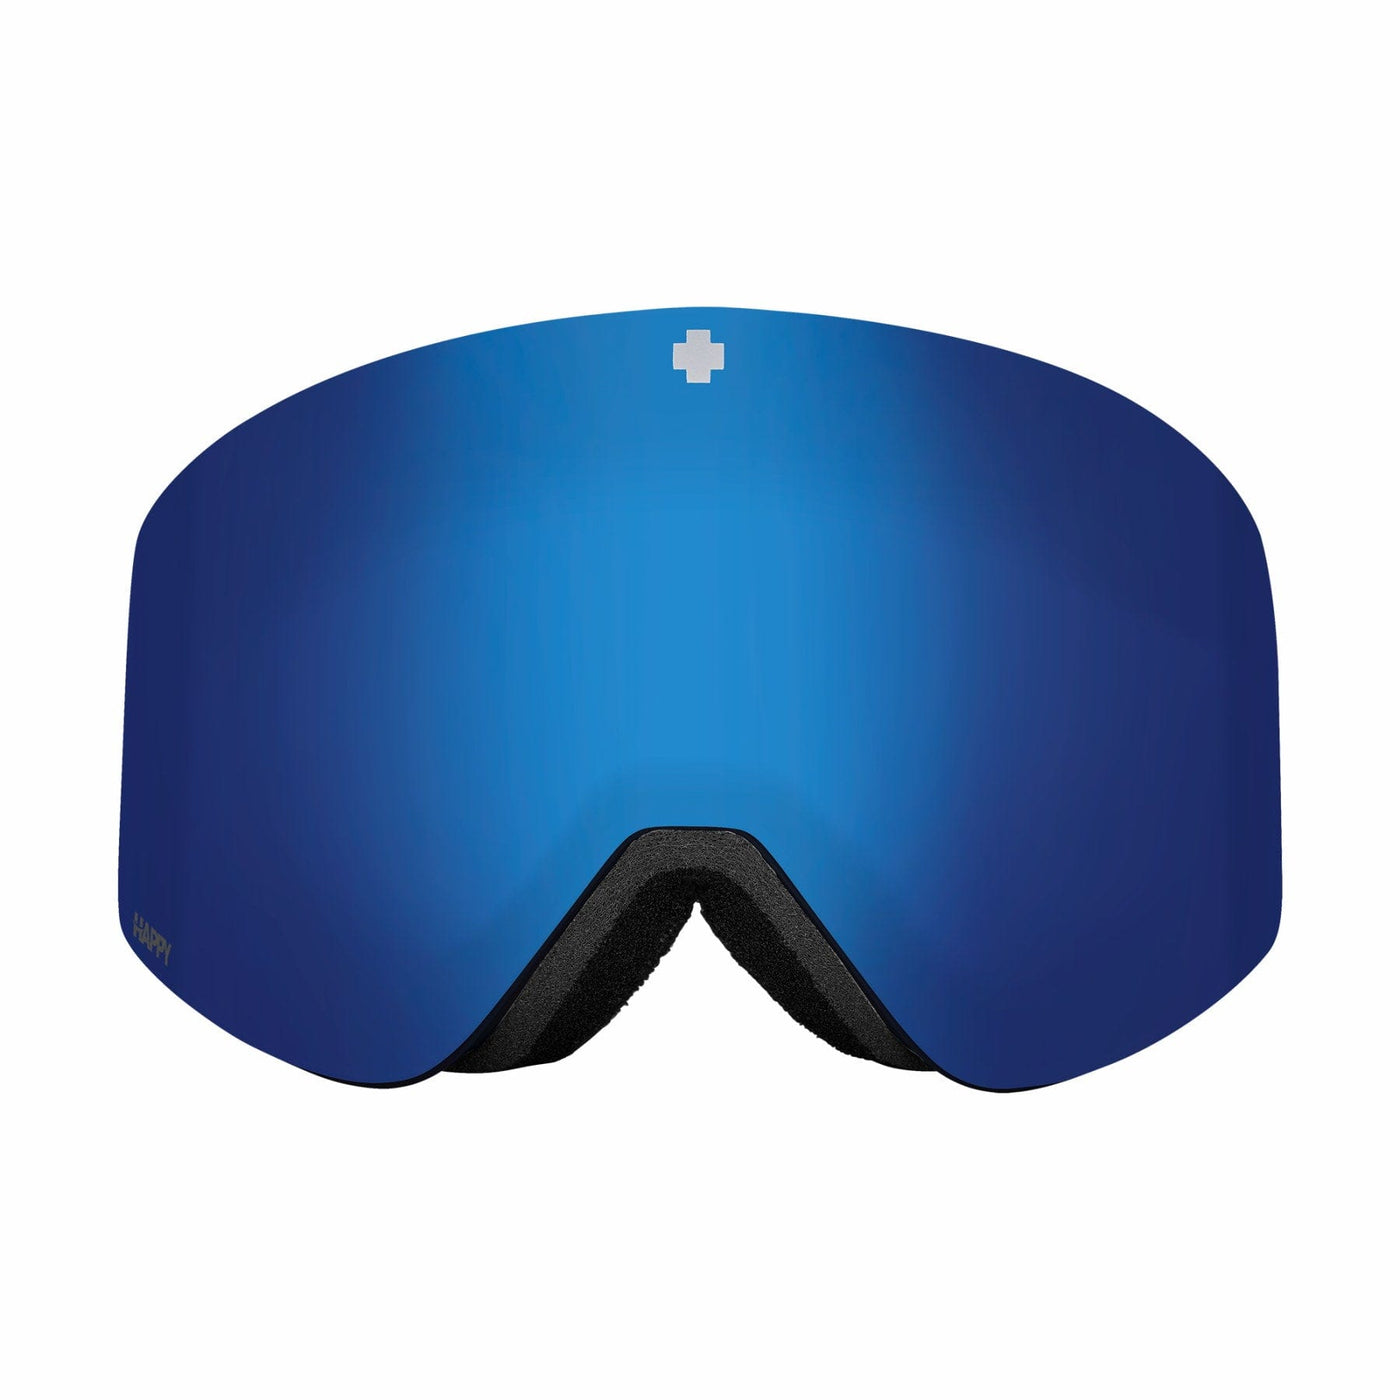 SPY Marauder Elite Snow Goggles - Dark Blue 8Lines Shop - Fast Shipping